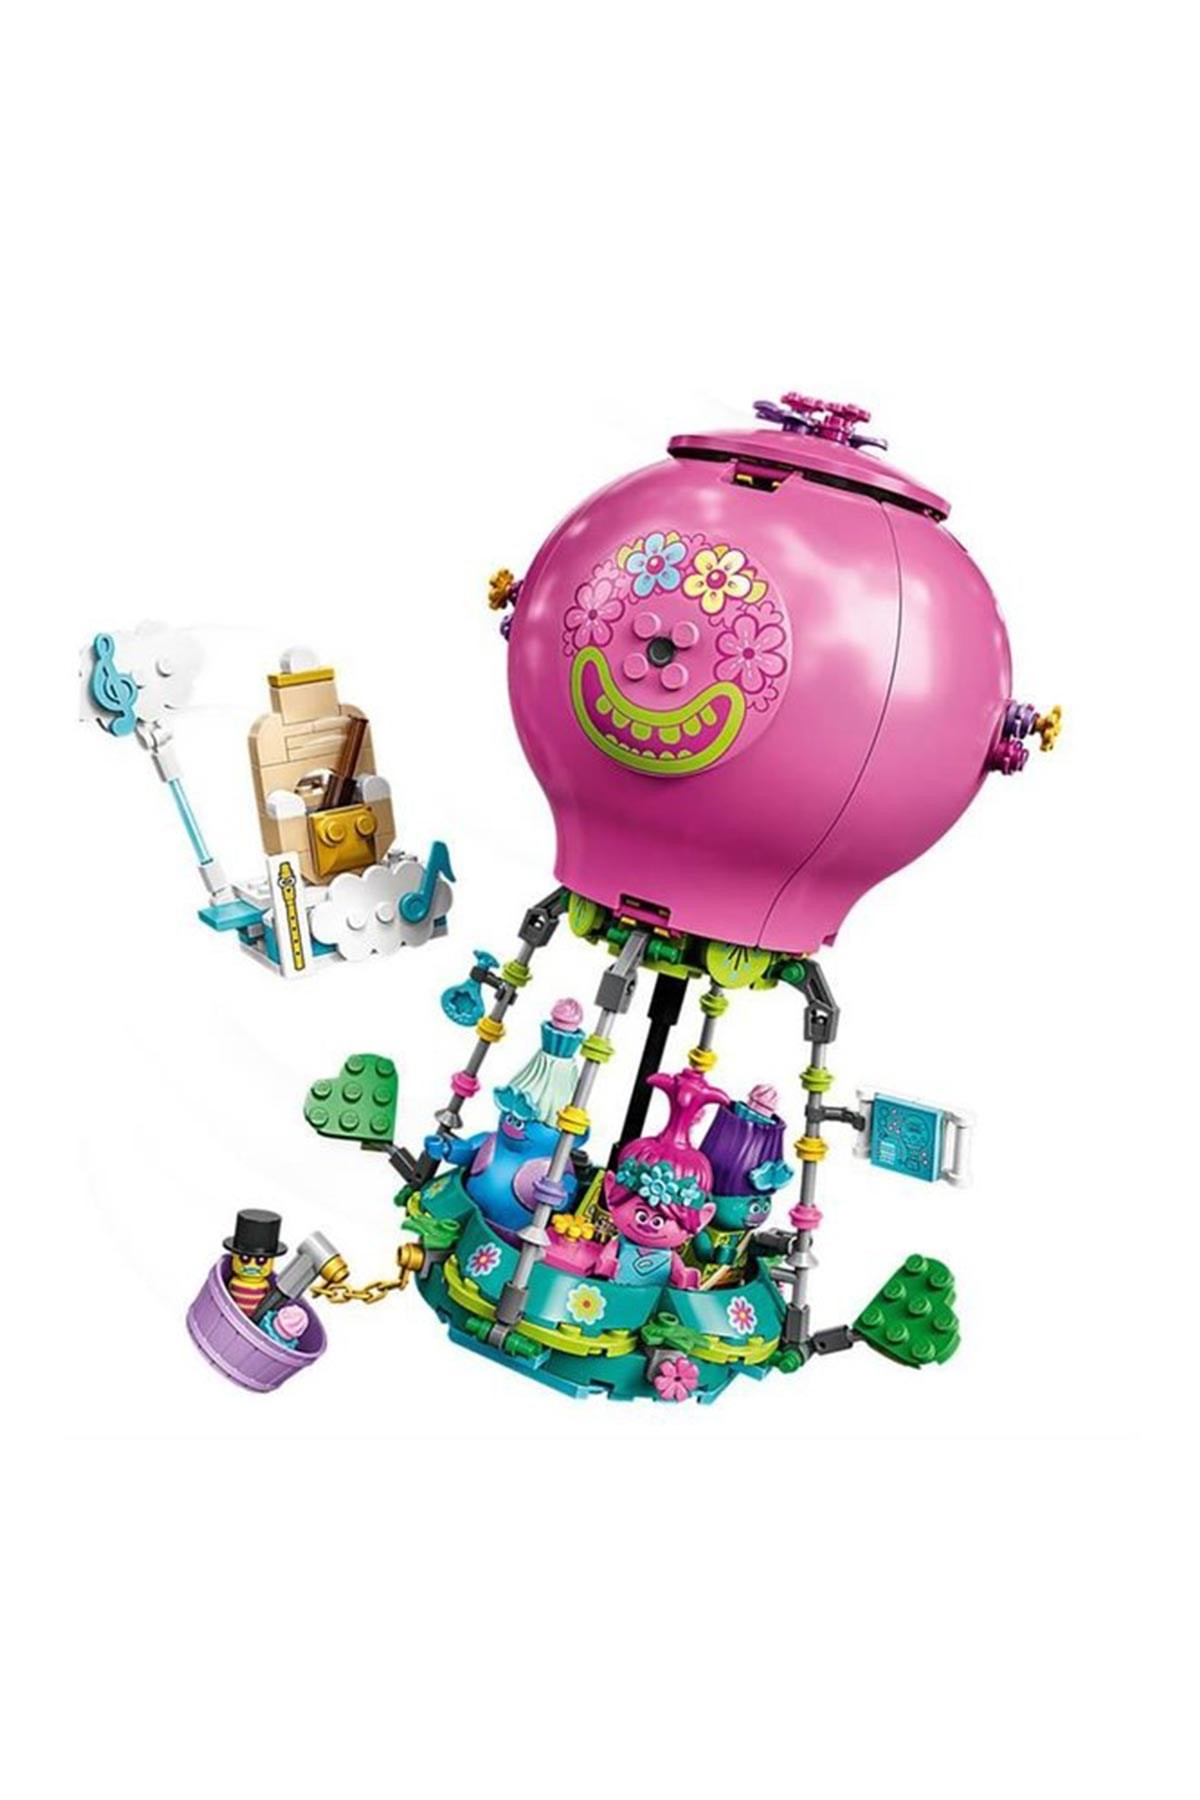 Lego Trolls Poppy's Ballon